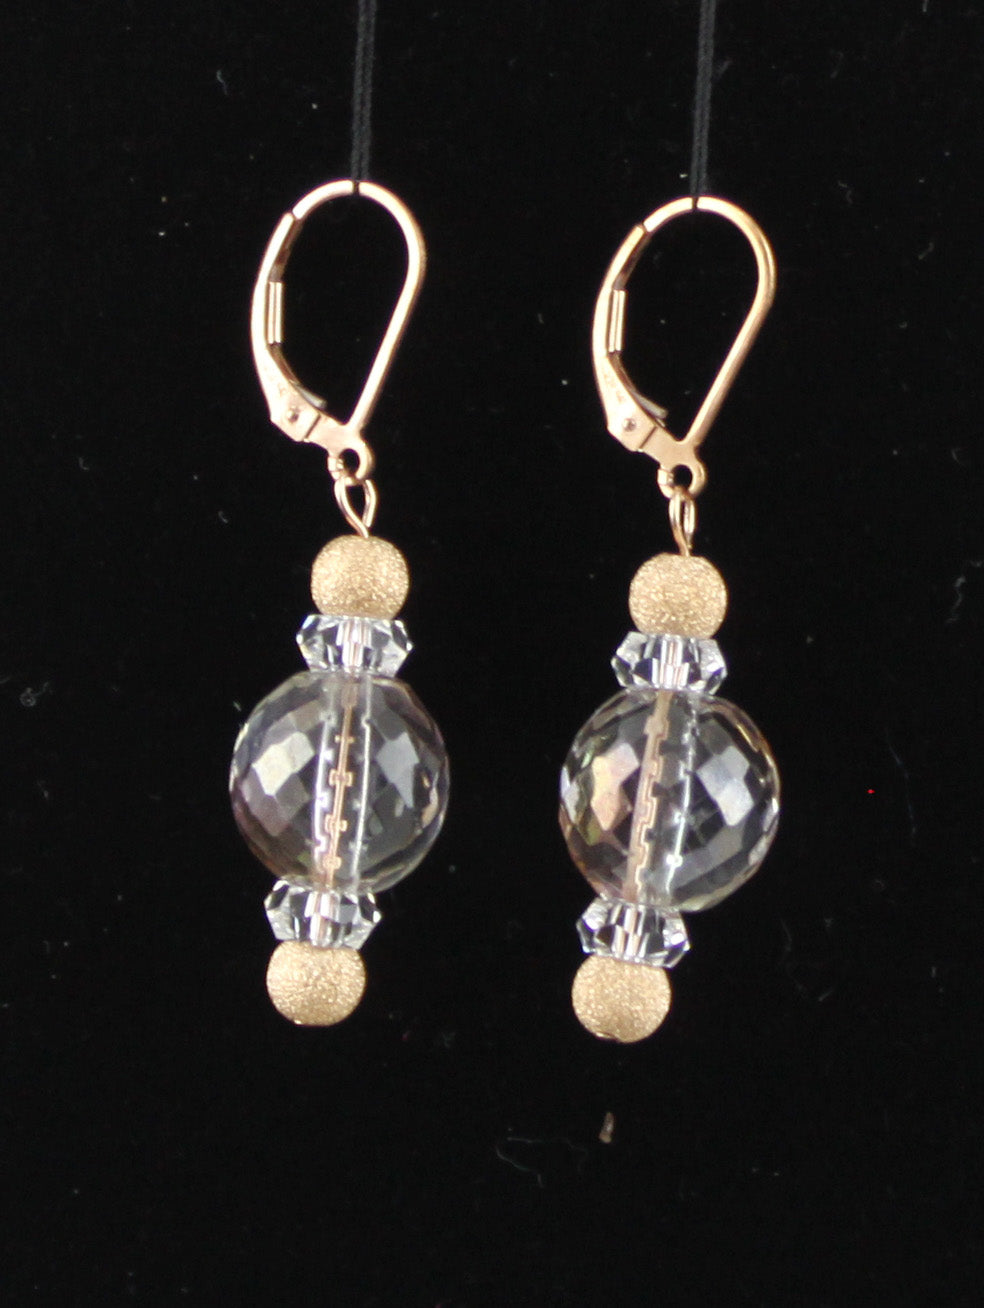 Swarovski Crystal and Czech Glass Earrings